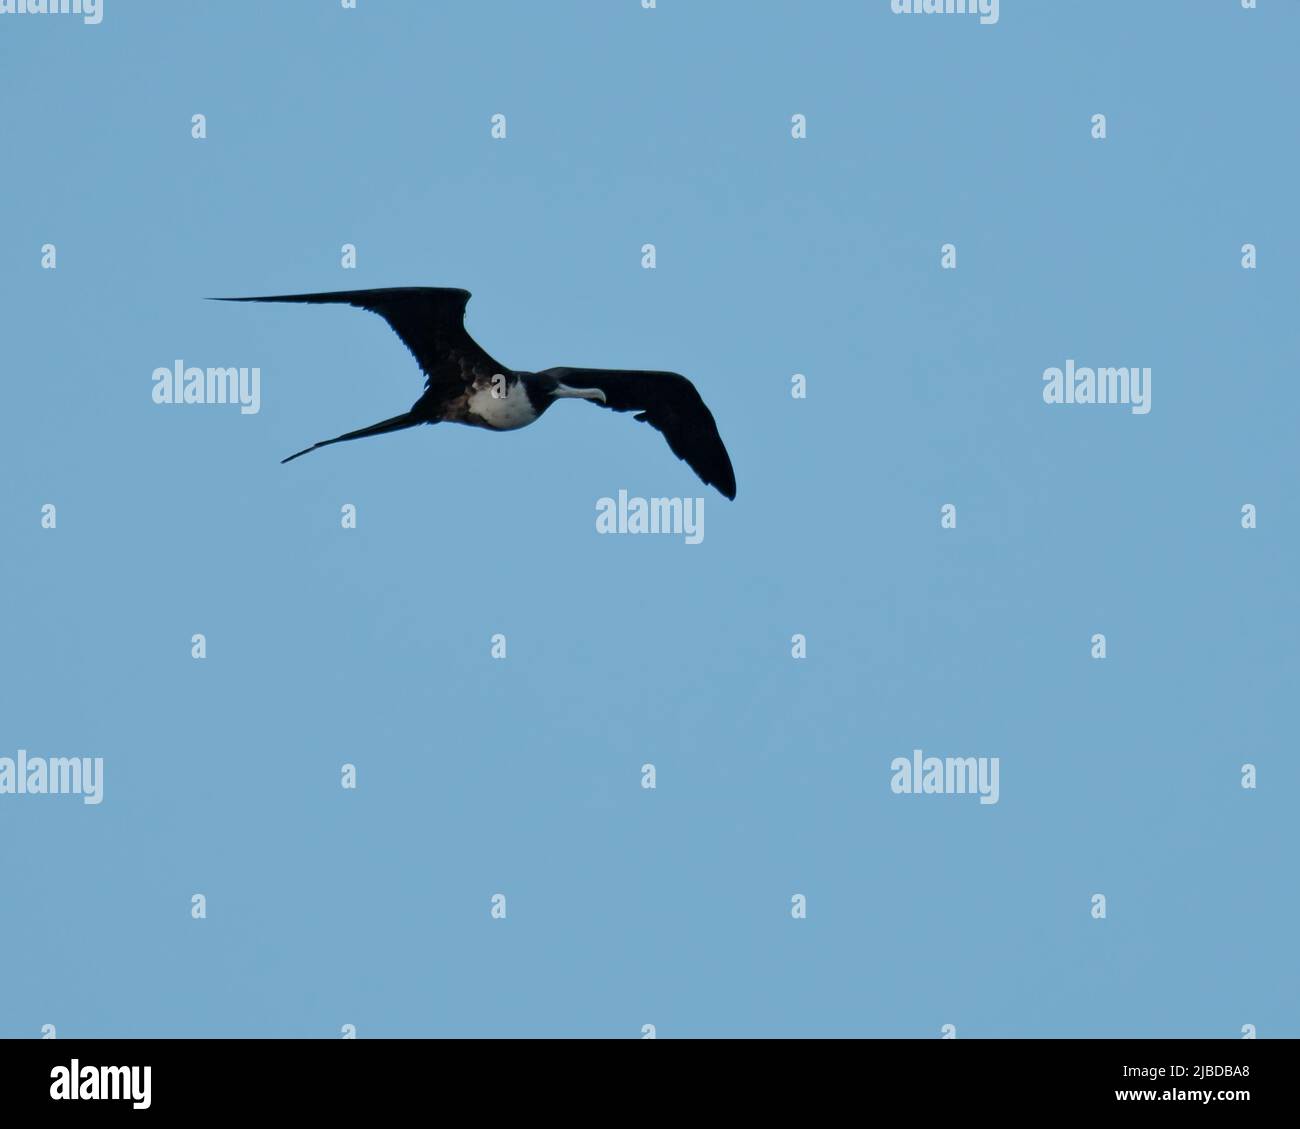 A Magnificent frigatebird soaring through blue Caribbean skies Stock Photo